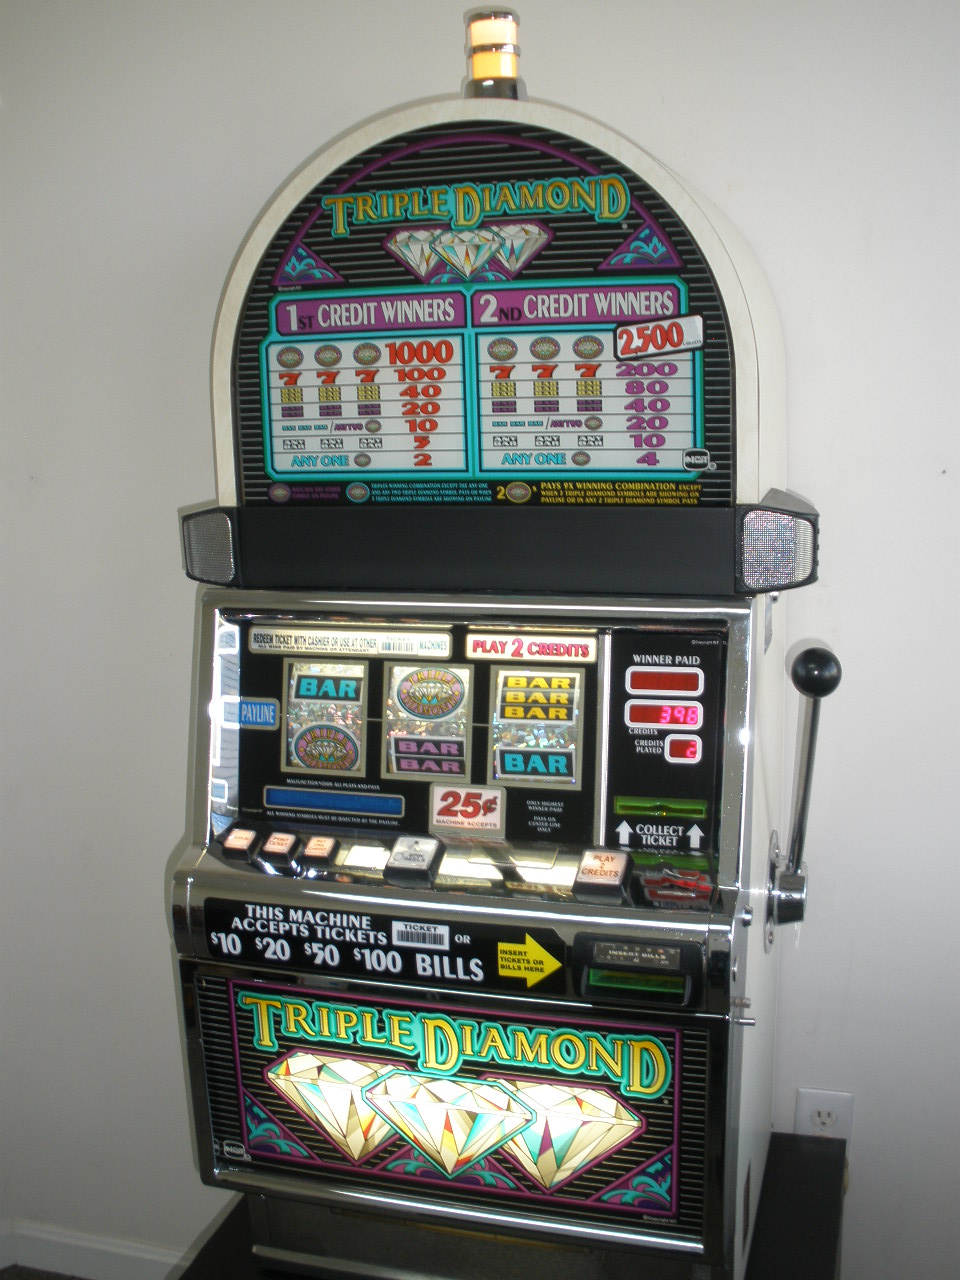 ocean magic slot machine igt